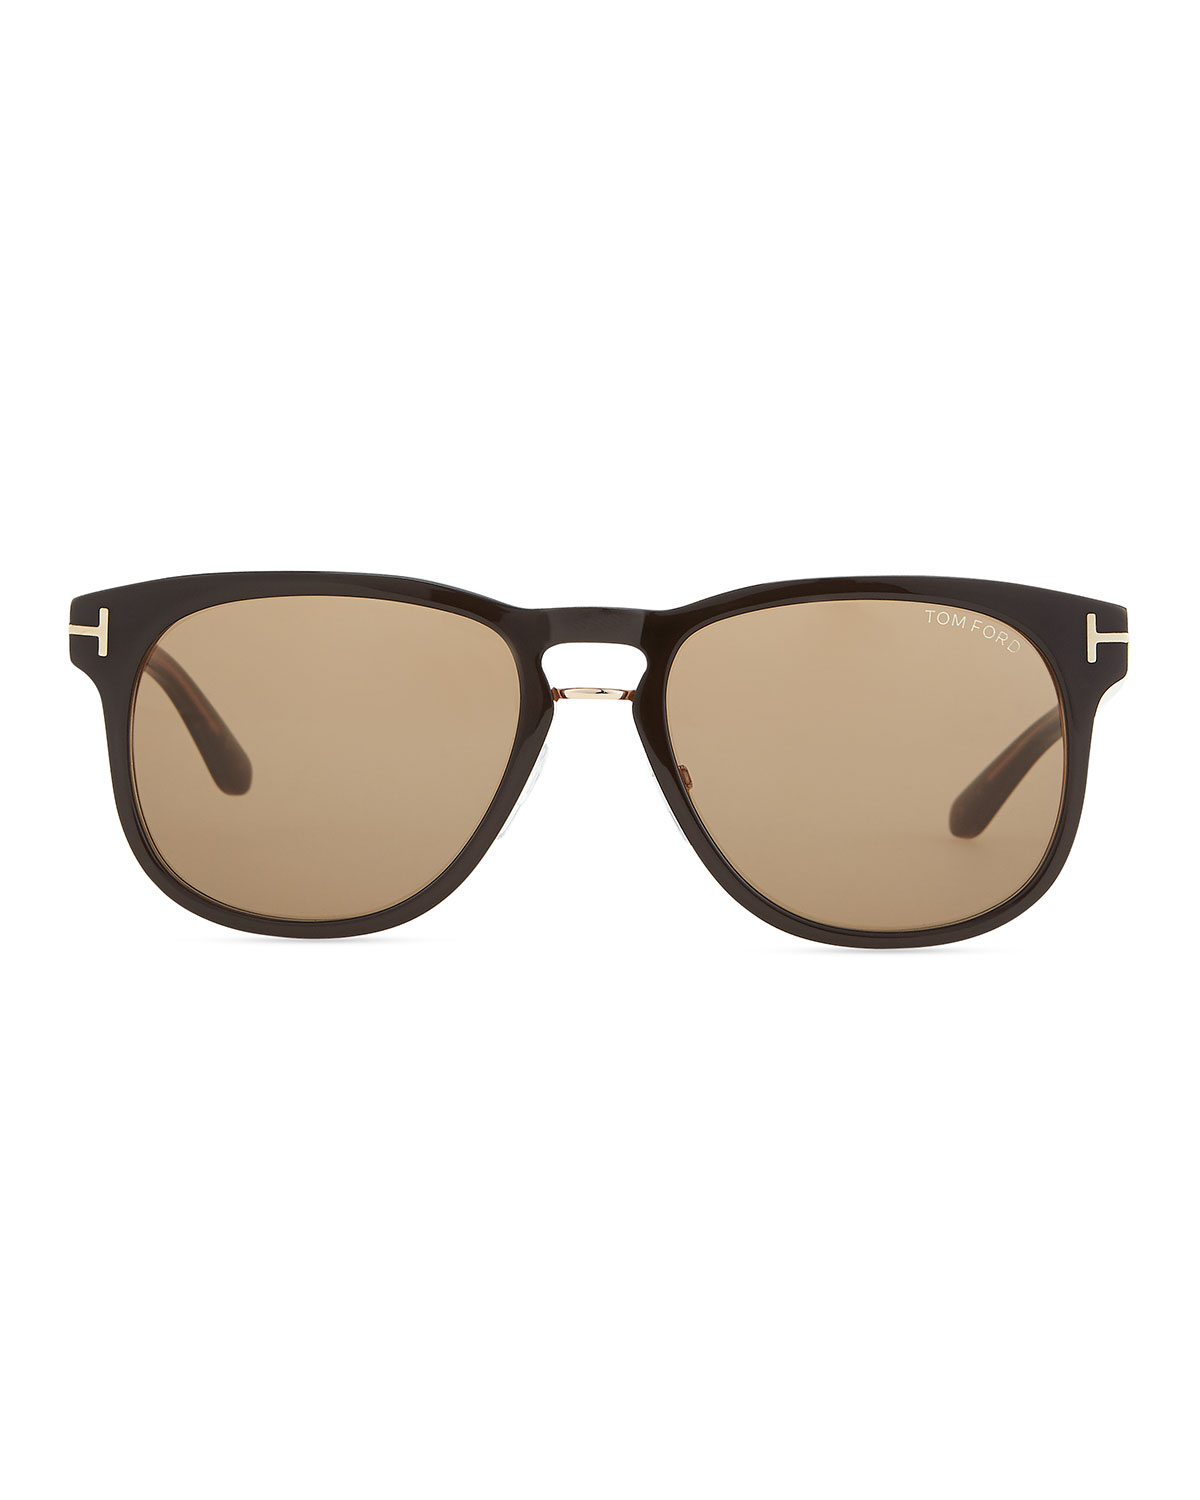 Tom ford retro inspired sunglasses #7